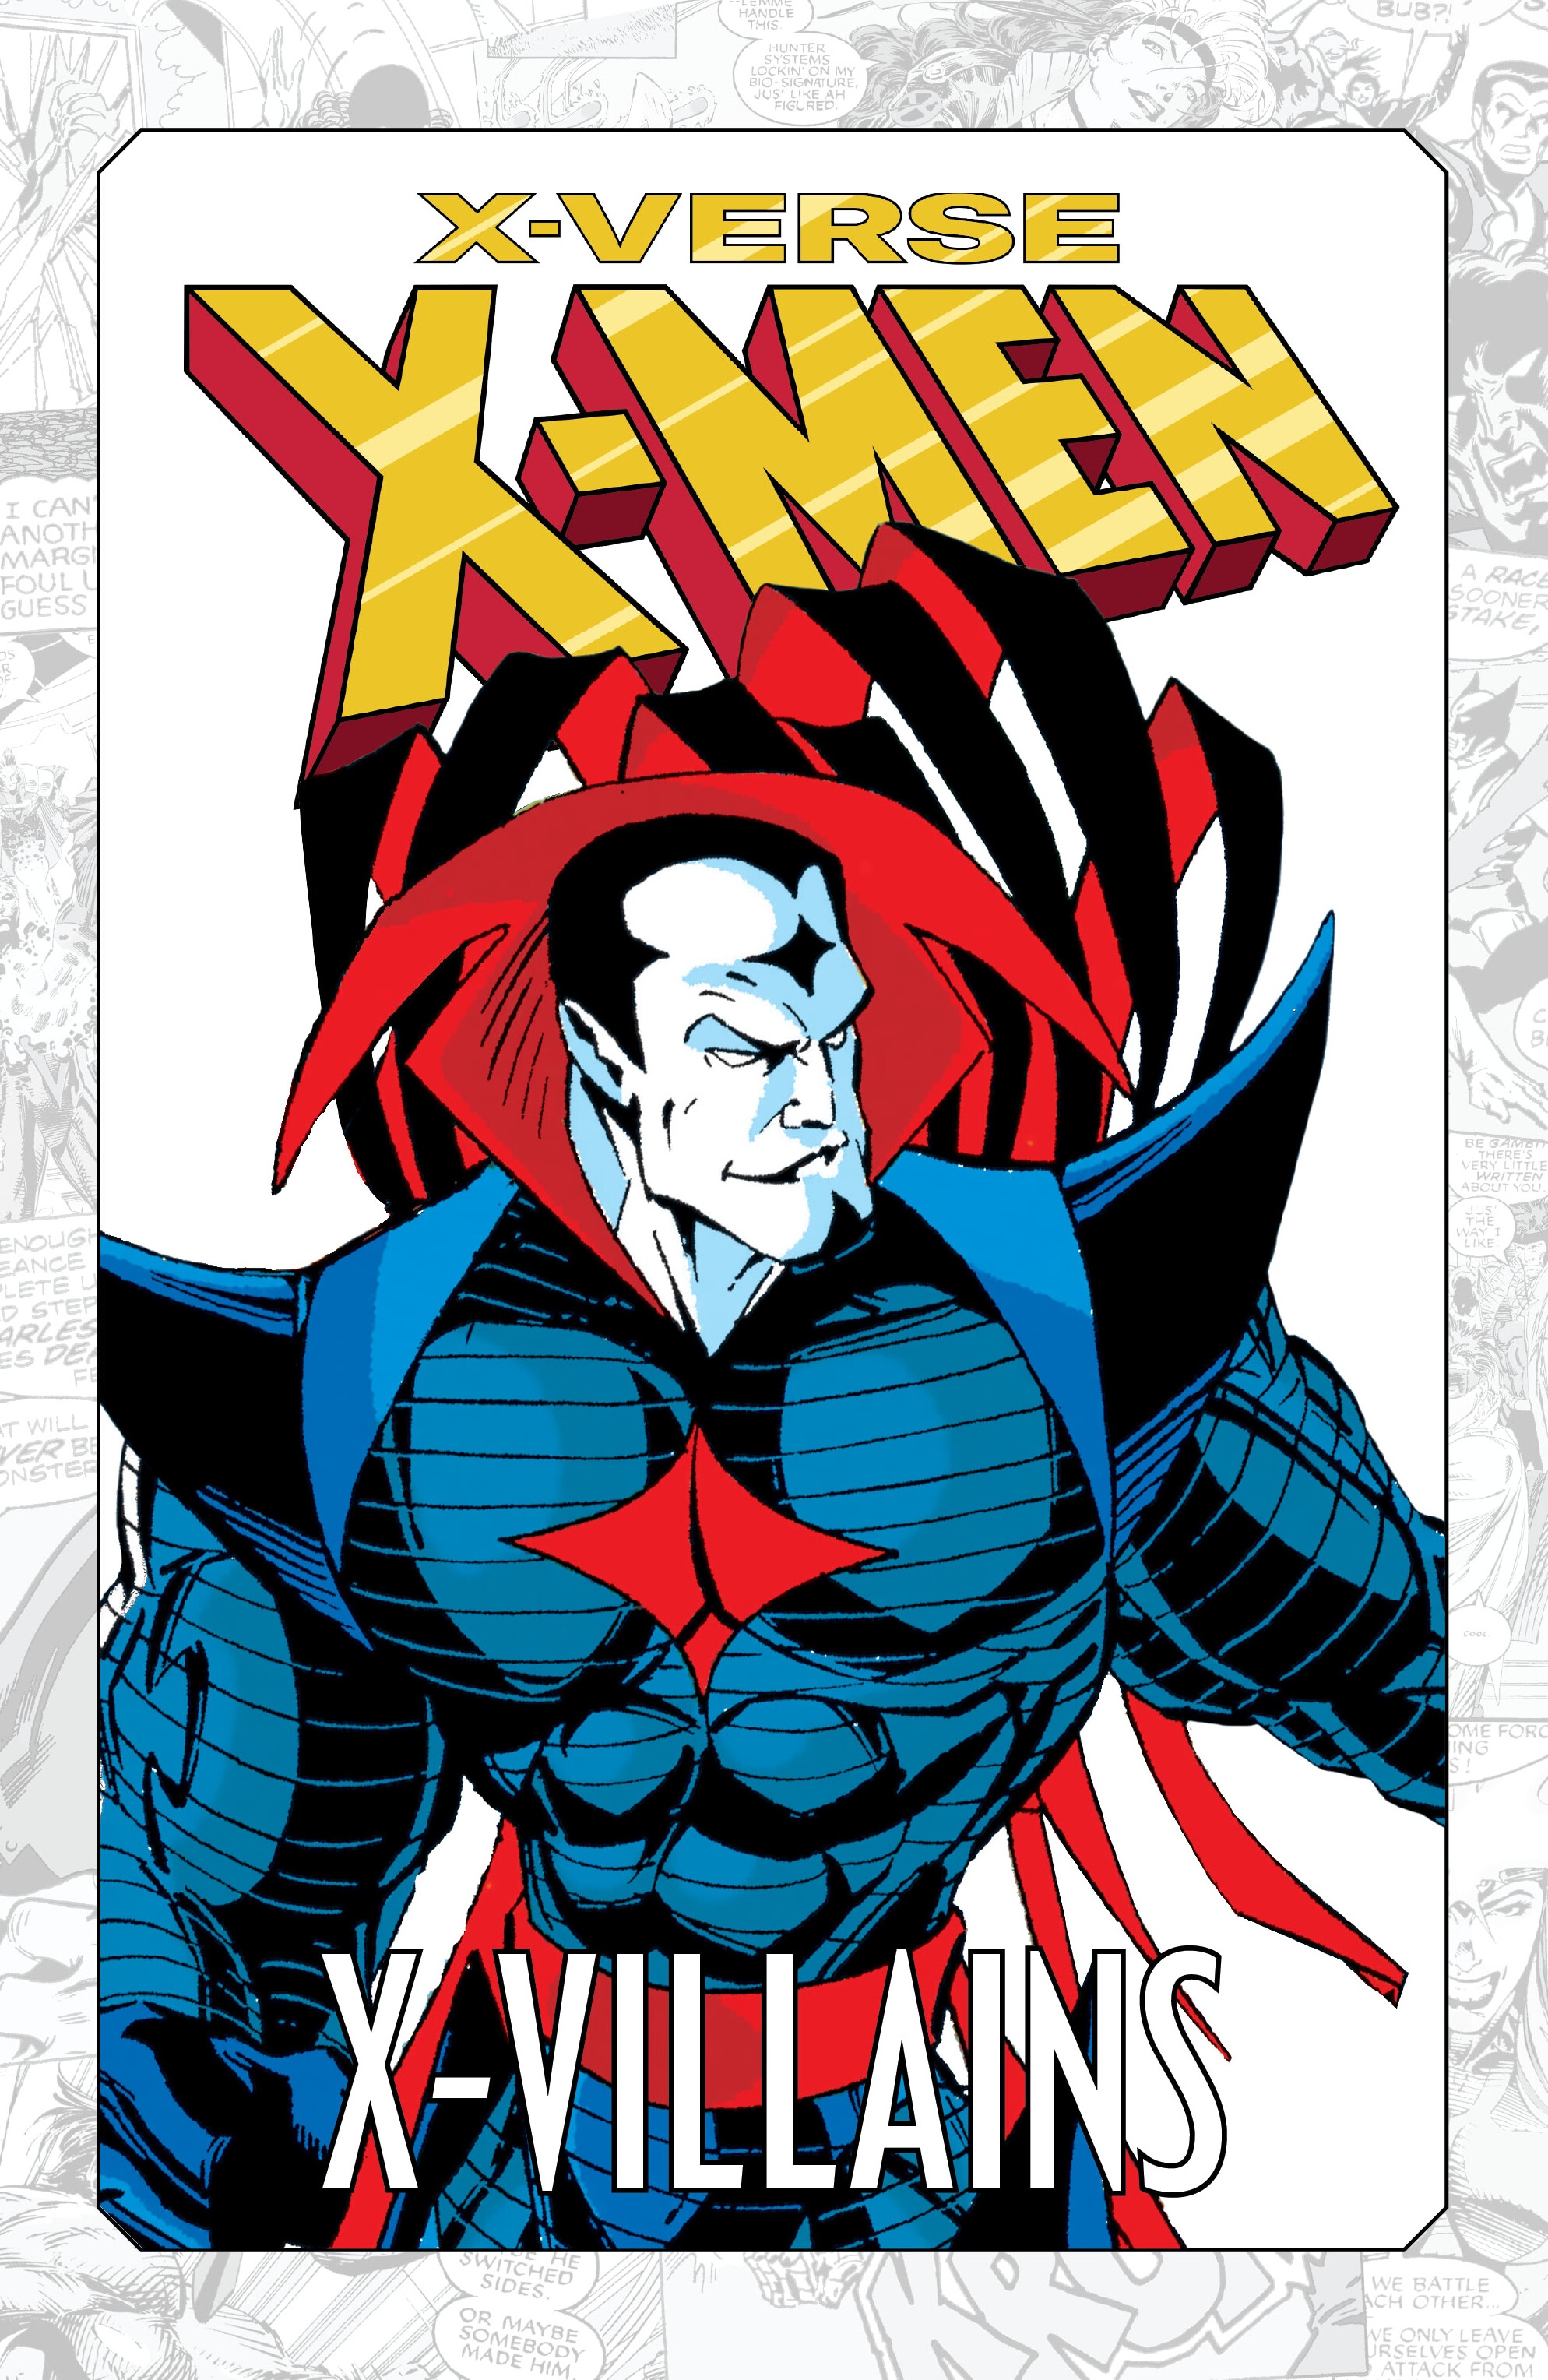 Read online X-Men: X-Verse comic -  Issue # X-Villains - 2